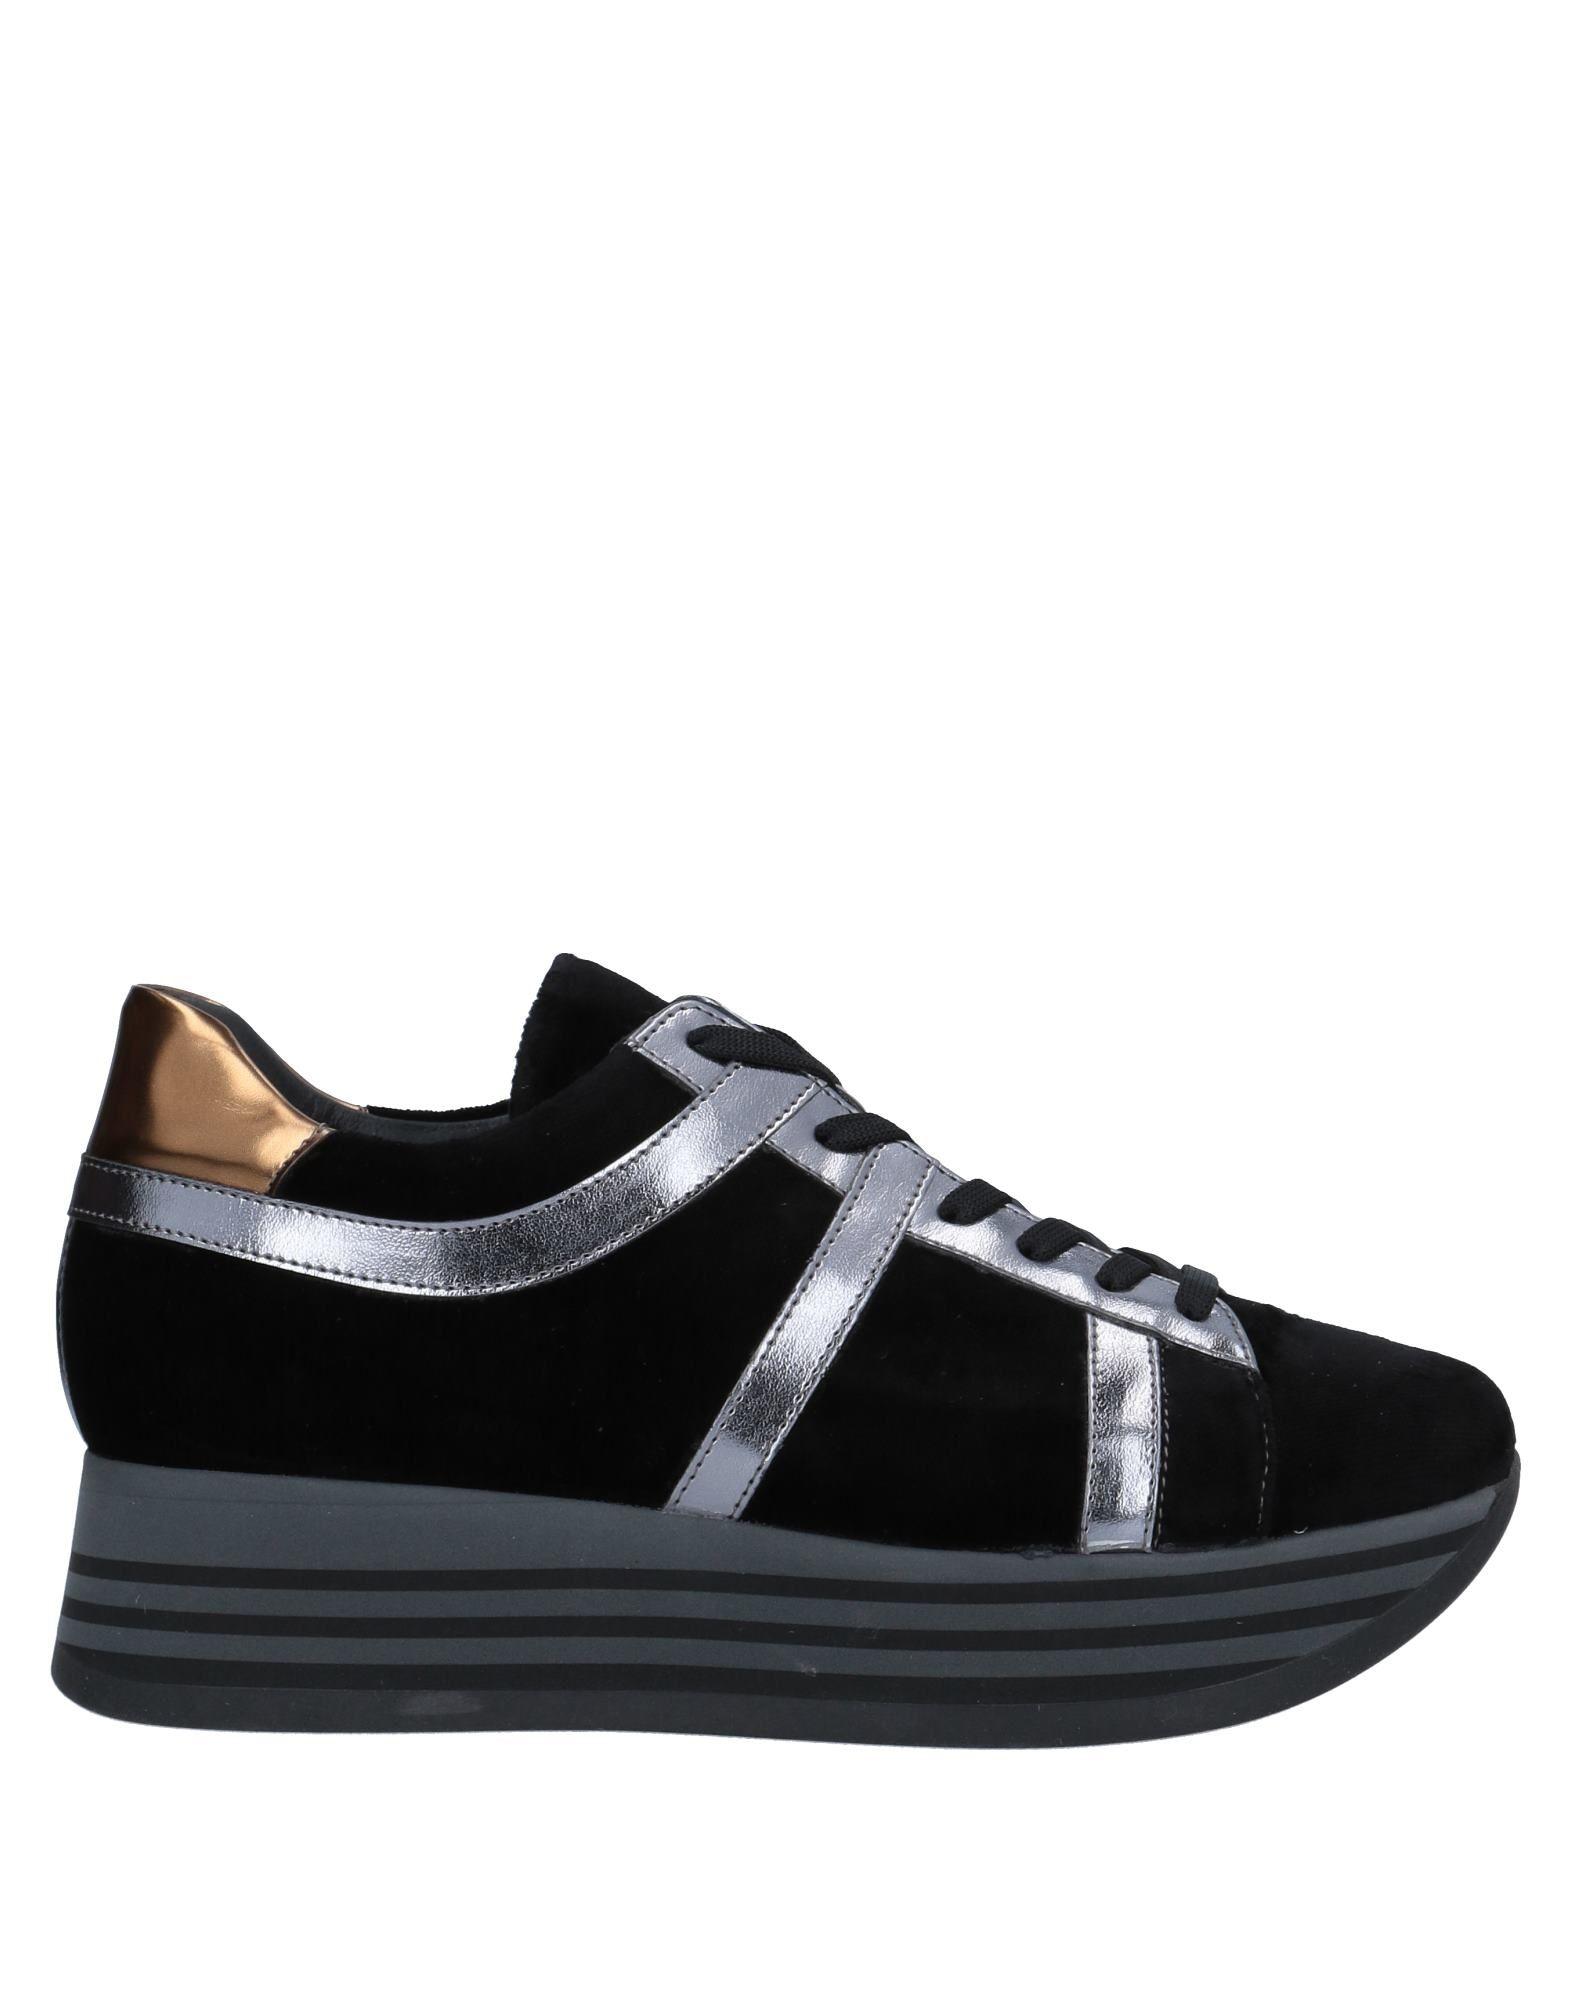 F.lli Bruglia Velvet Low-tops & Sneakers in Black - Lyst